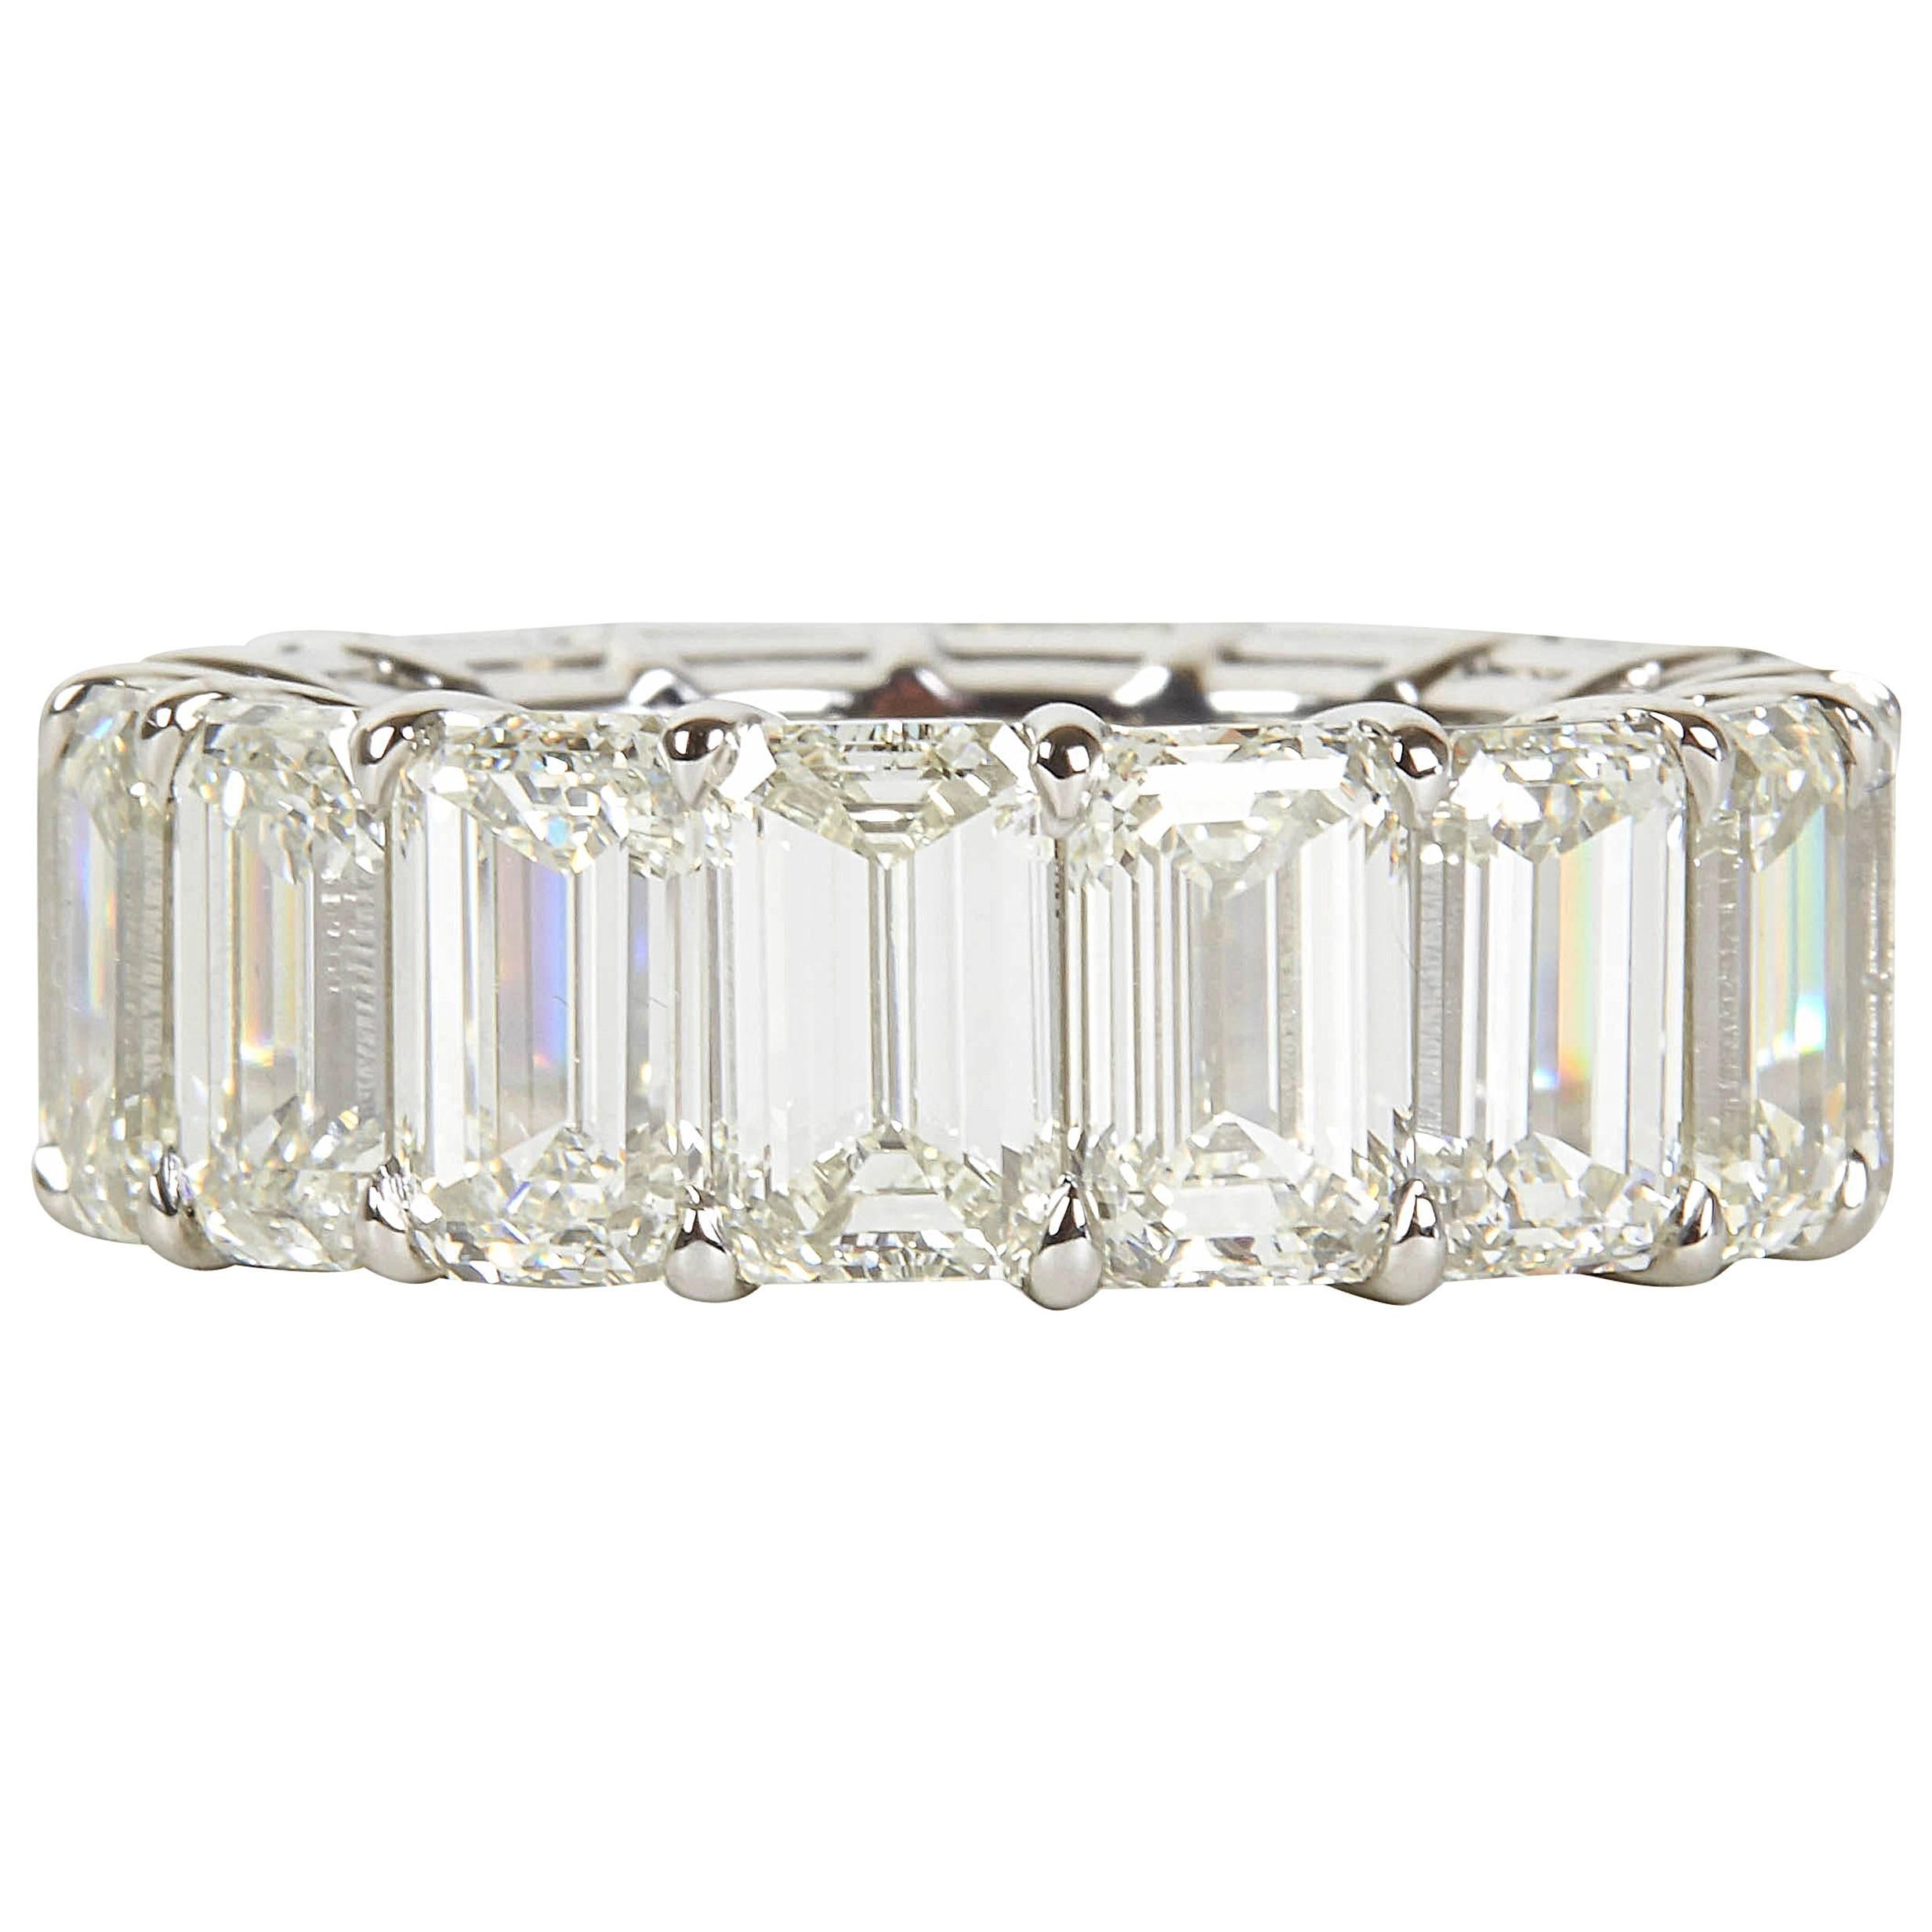 Incredible Carat Size Emerald Cut Diamond Platinum Eternity Band Ring